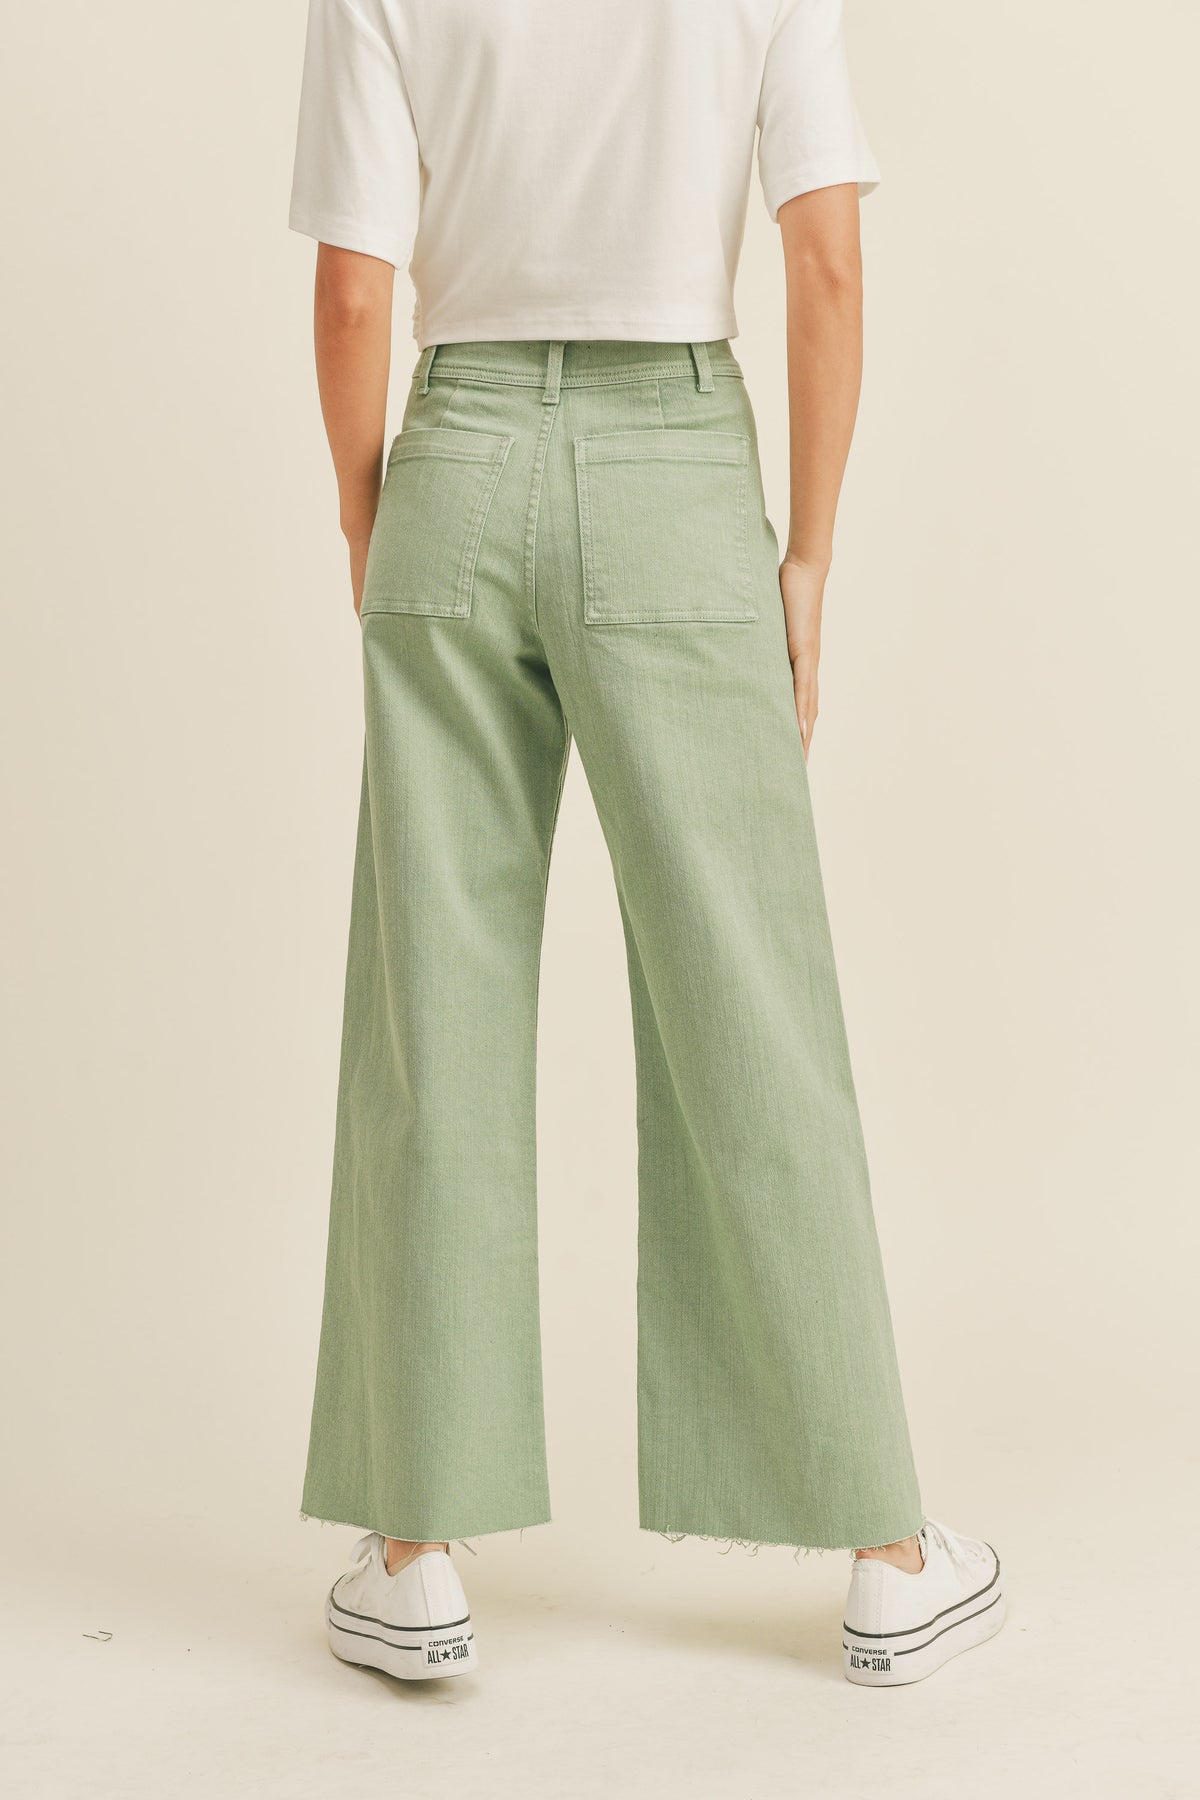 Buy SKENJEL Men's Casual Cotton Loose Denim Cargo Pants (32, Green) at  Amazon.in